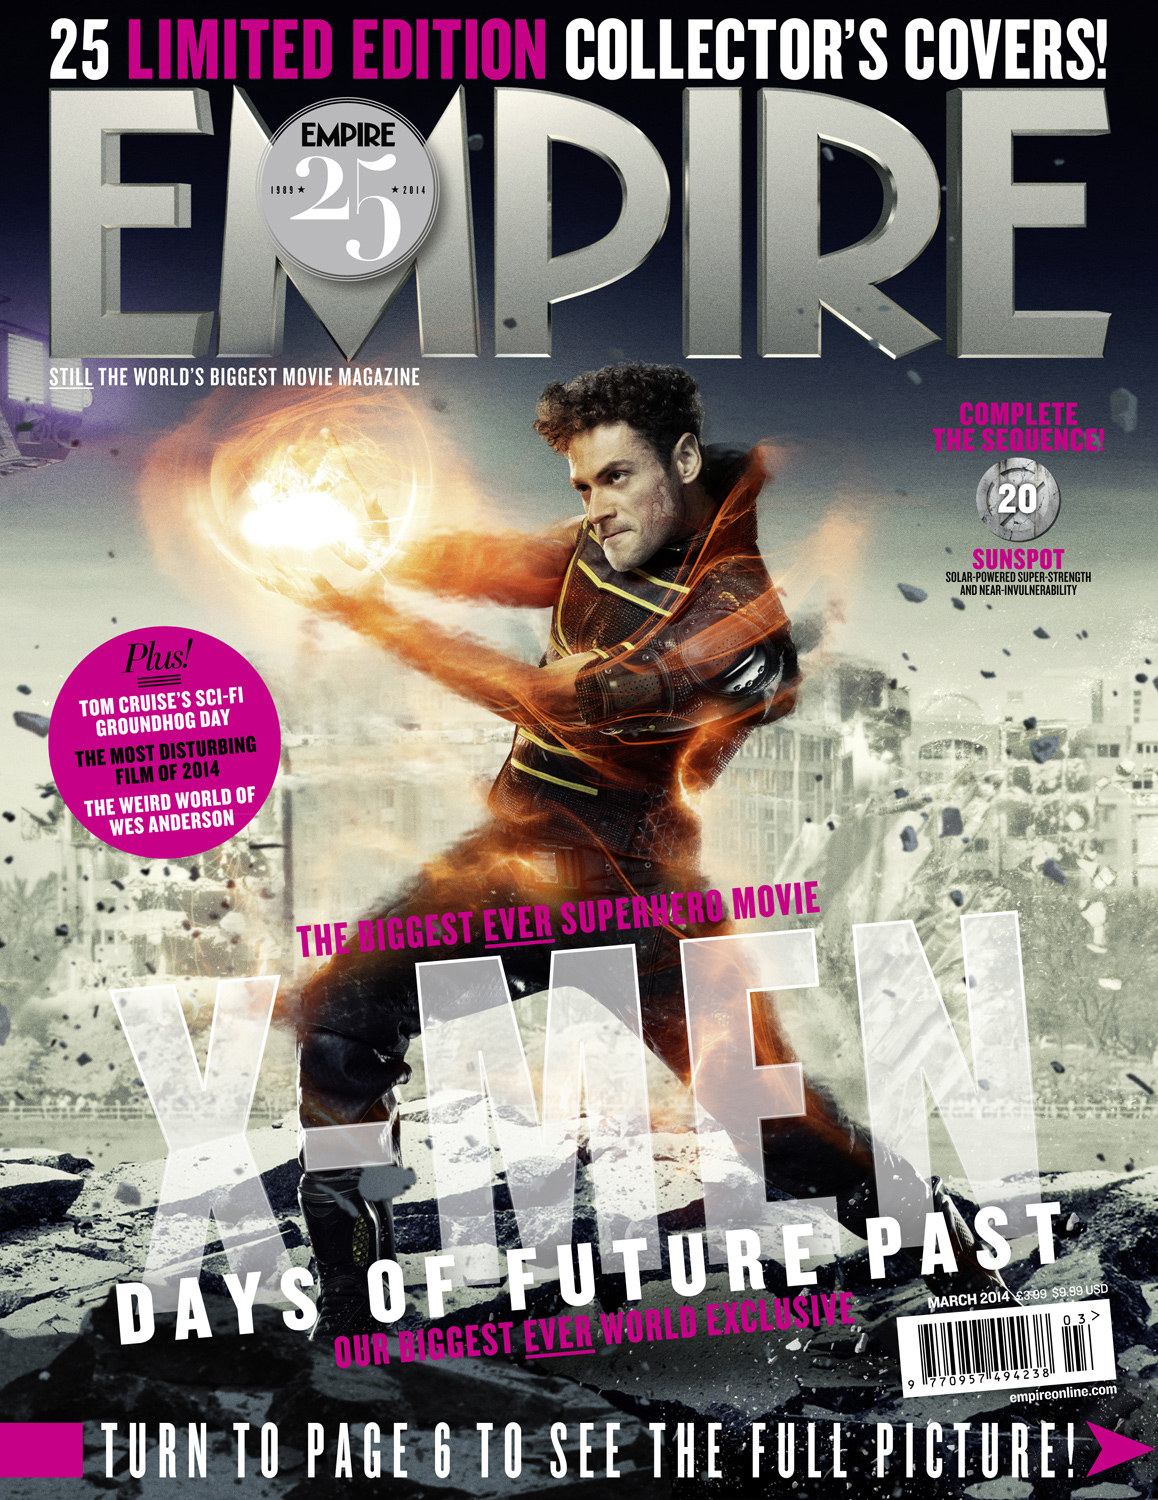 x-men-days-of-future-past-sunspot-adan-canto-empire-cover.jpg